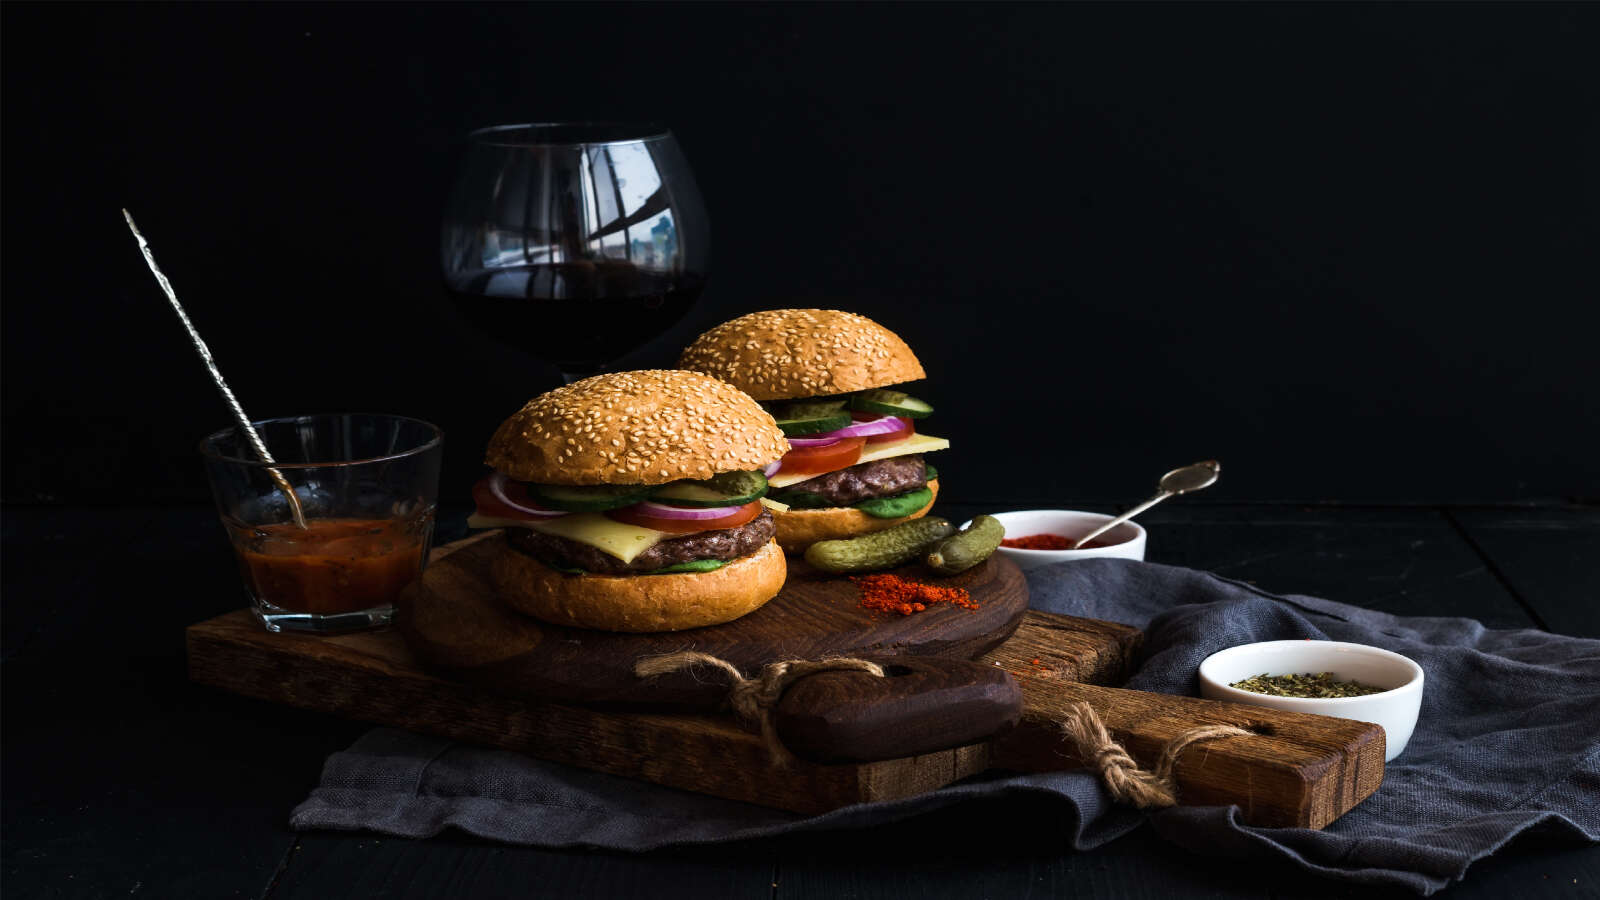 Discover the gourmet burger recipes to revolutionize your food